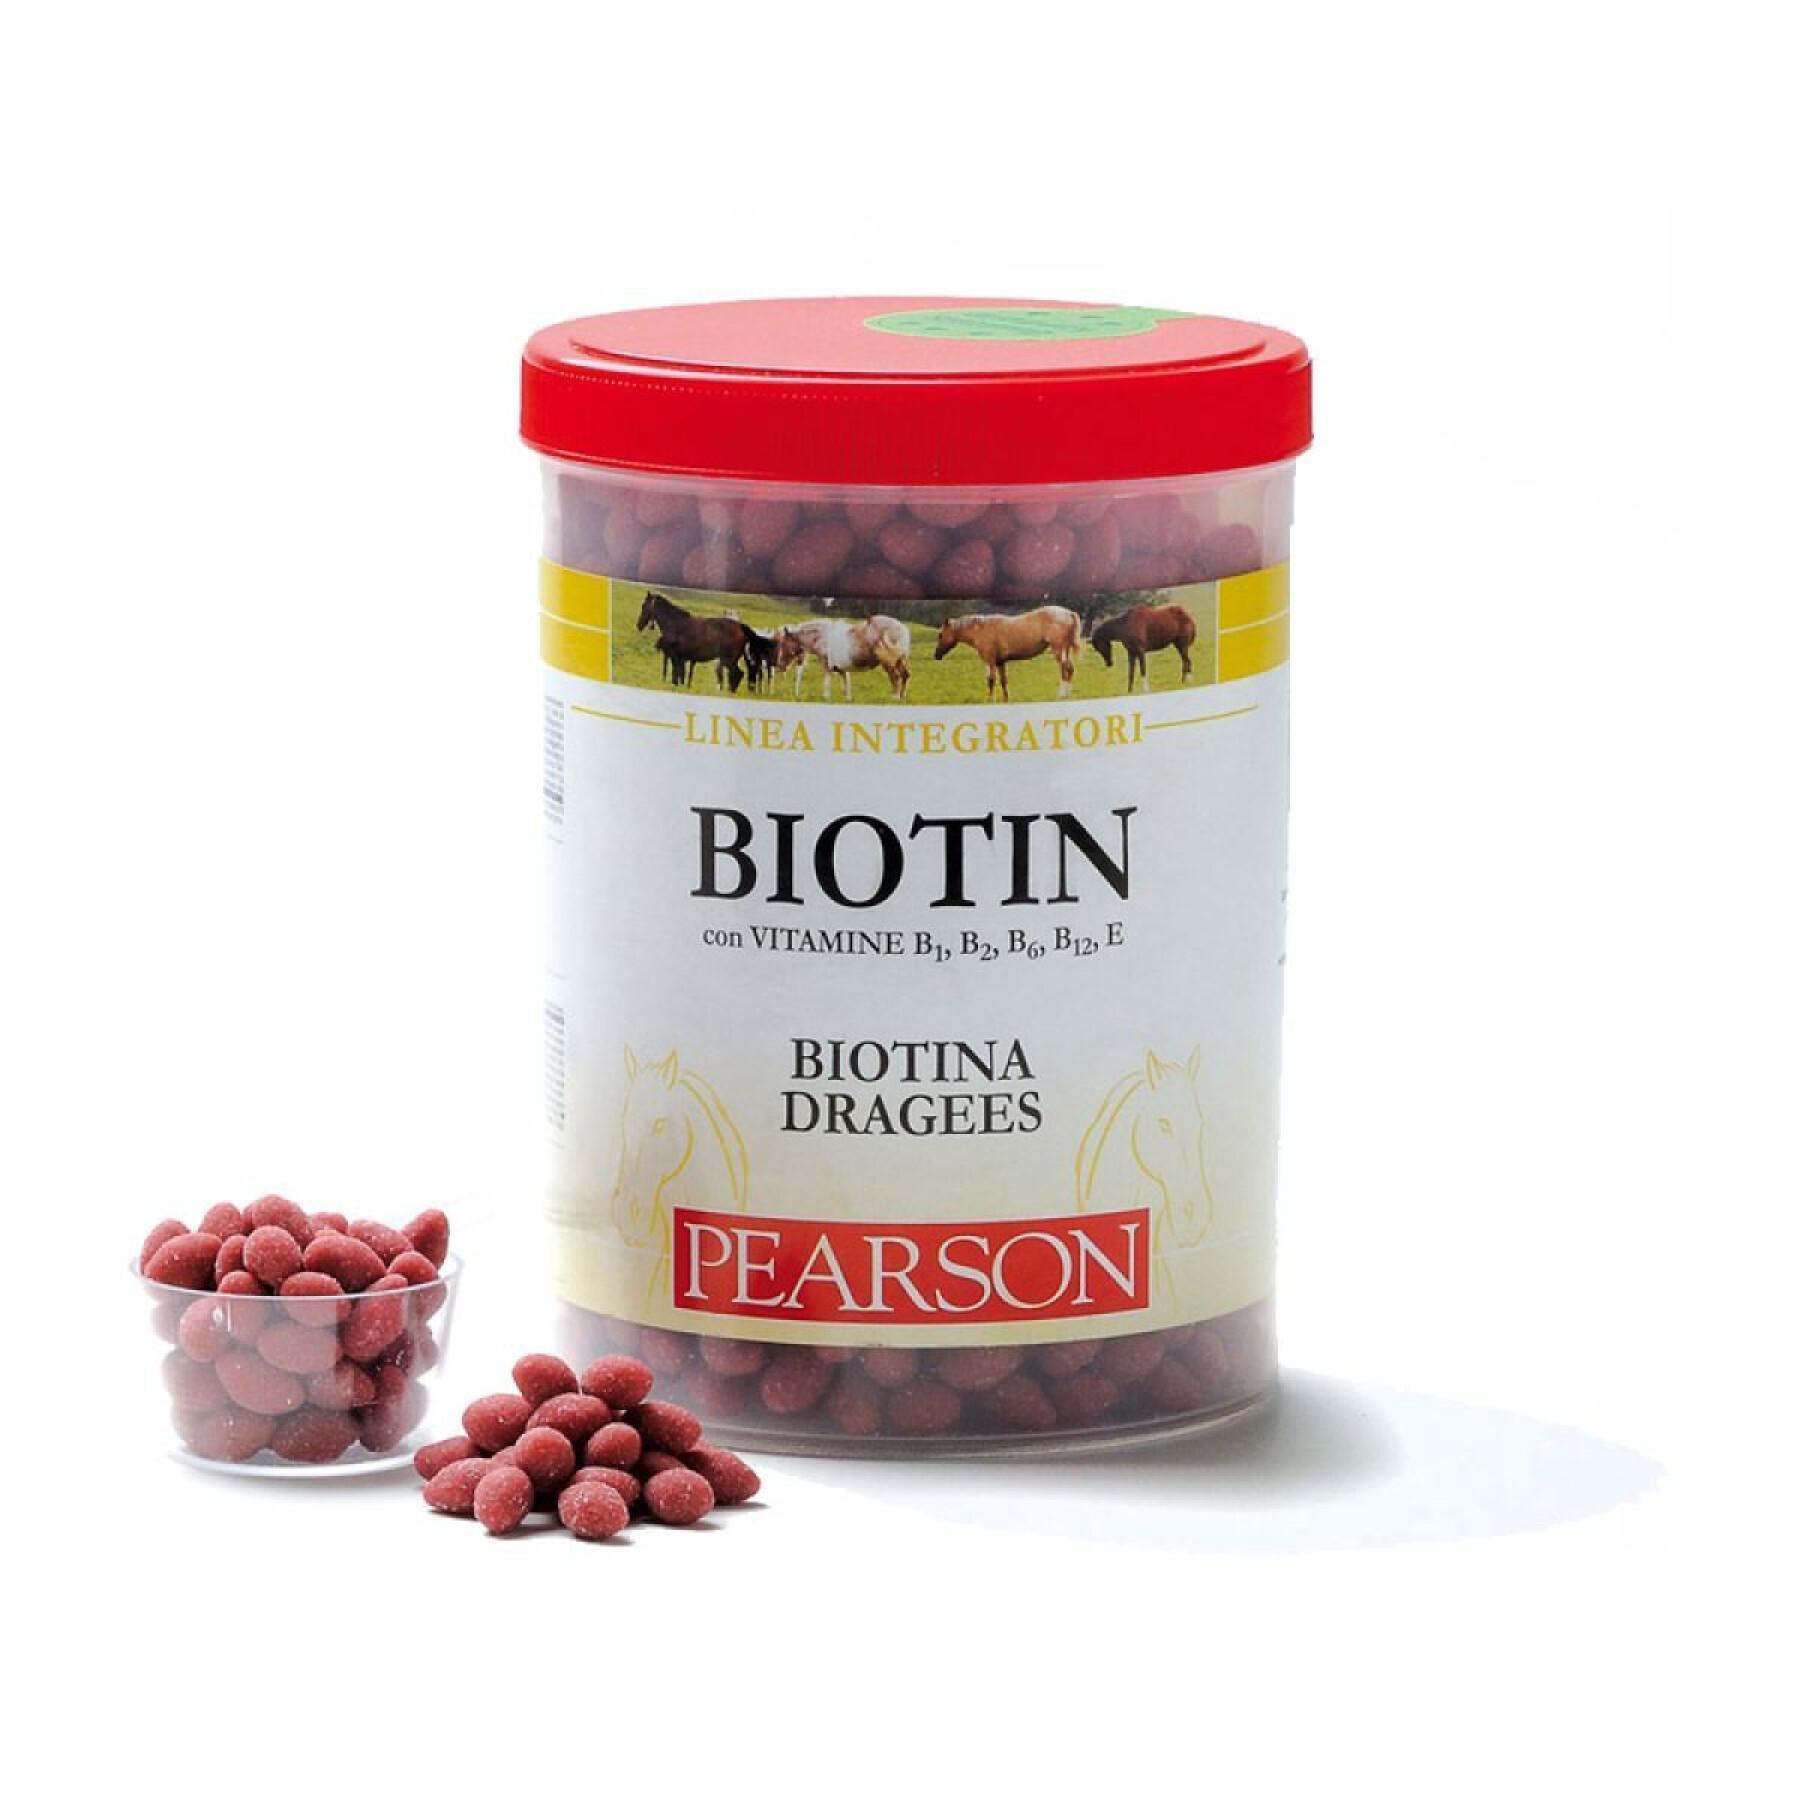 Biotin for horses Pearson